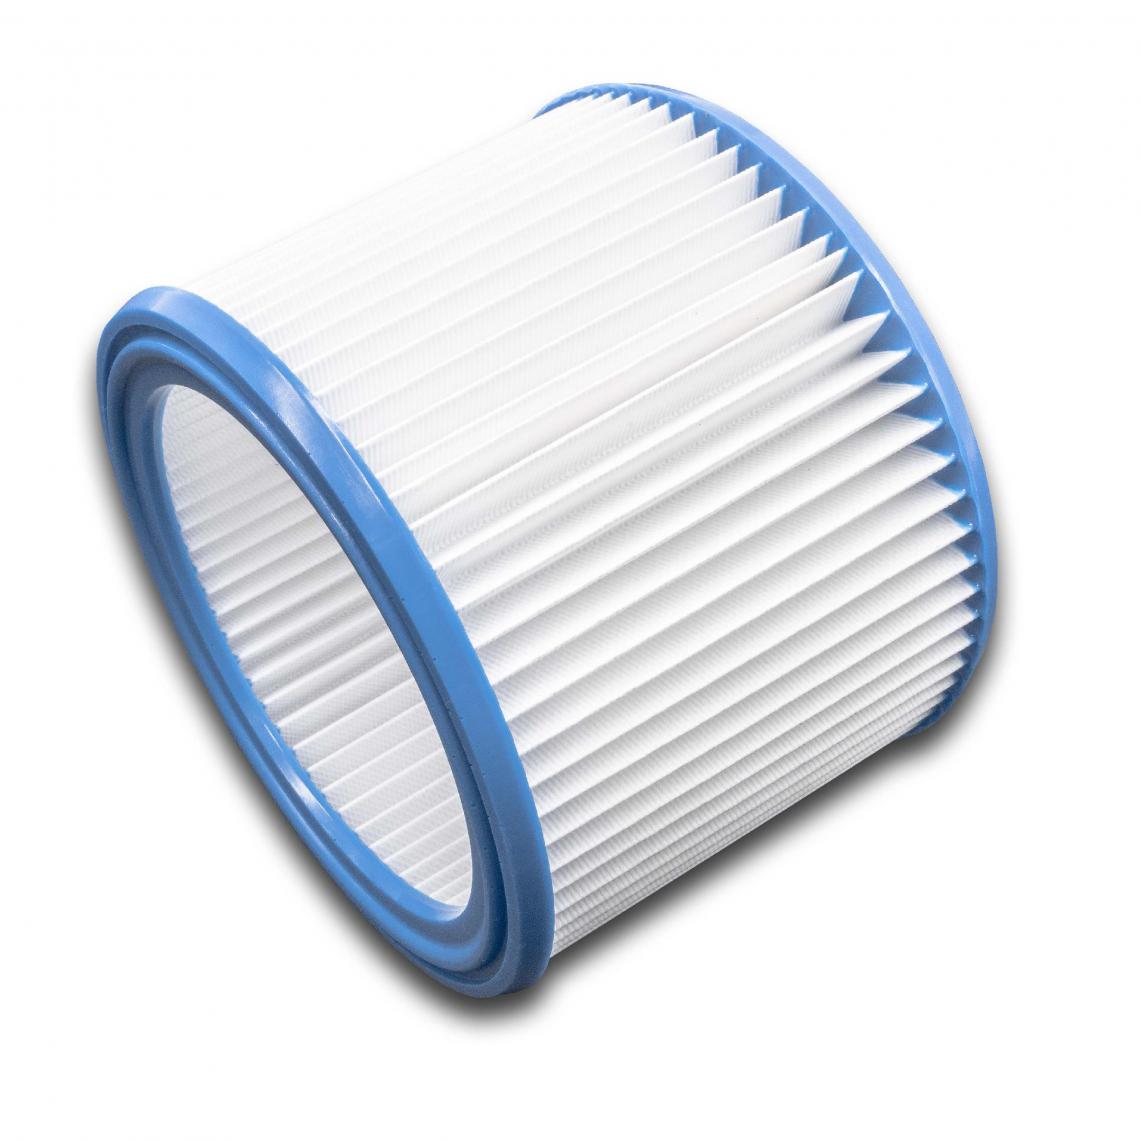 Vhbw - vhbw Set de filtres 10x Filtre plissé compatible avec JMP Inox 35 aspirateur à sec ou humide - Filtre à cartouche - Accessoire entretien des sols